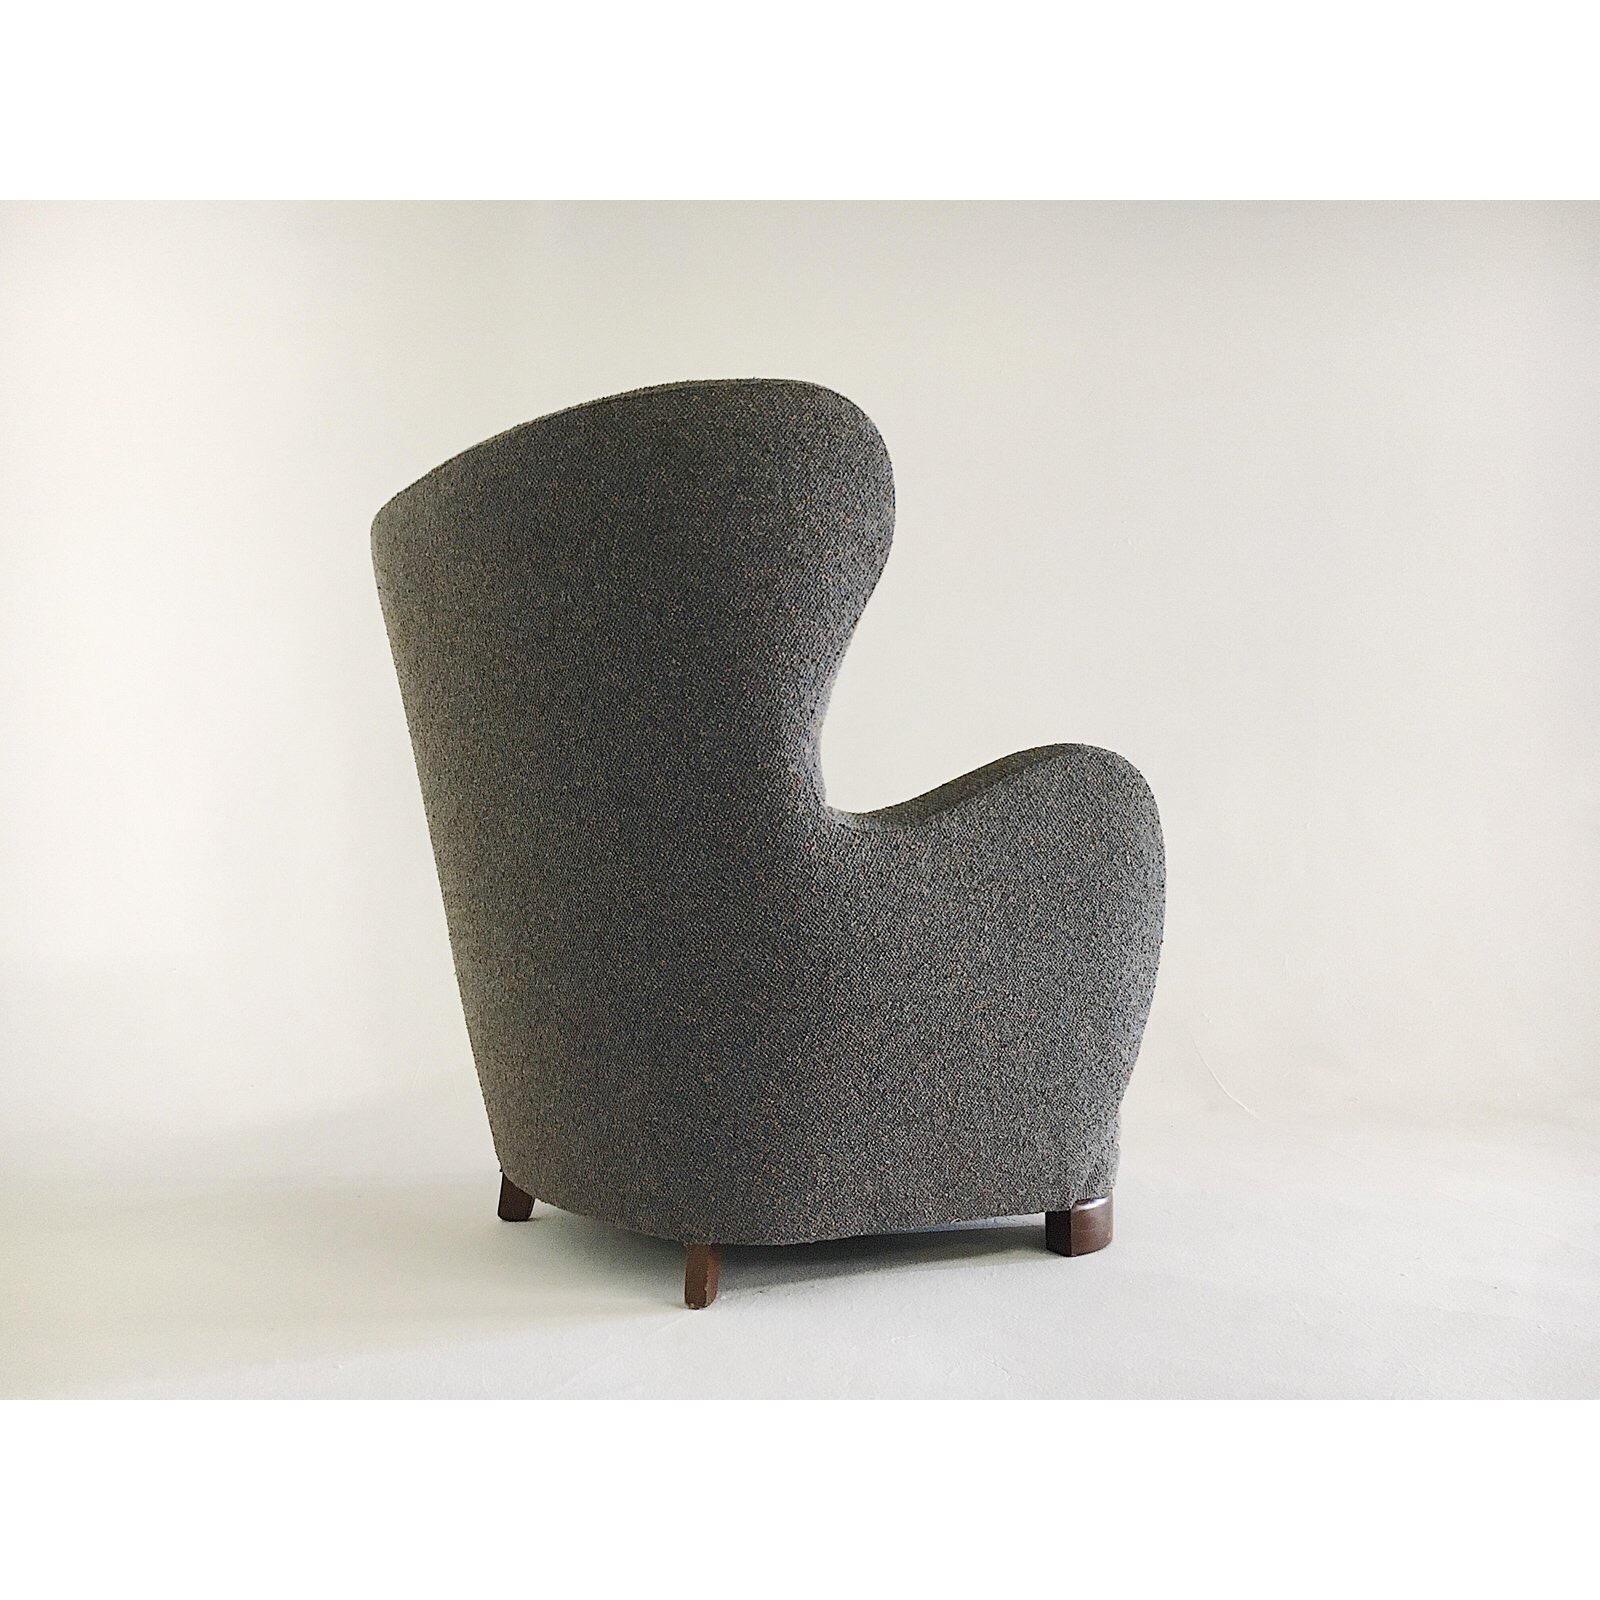 Flemming Lassen Attributed Lounge Chair in Boucle and Beech (Skandinavische Moderne)